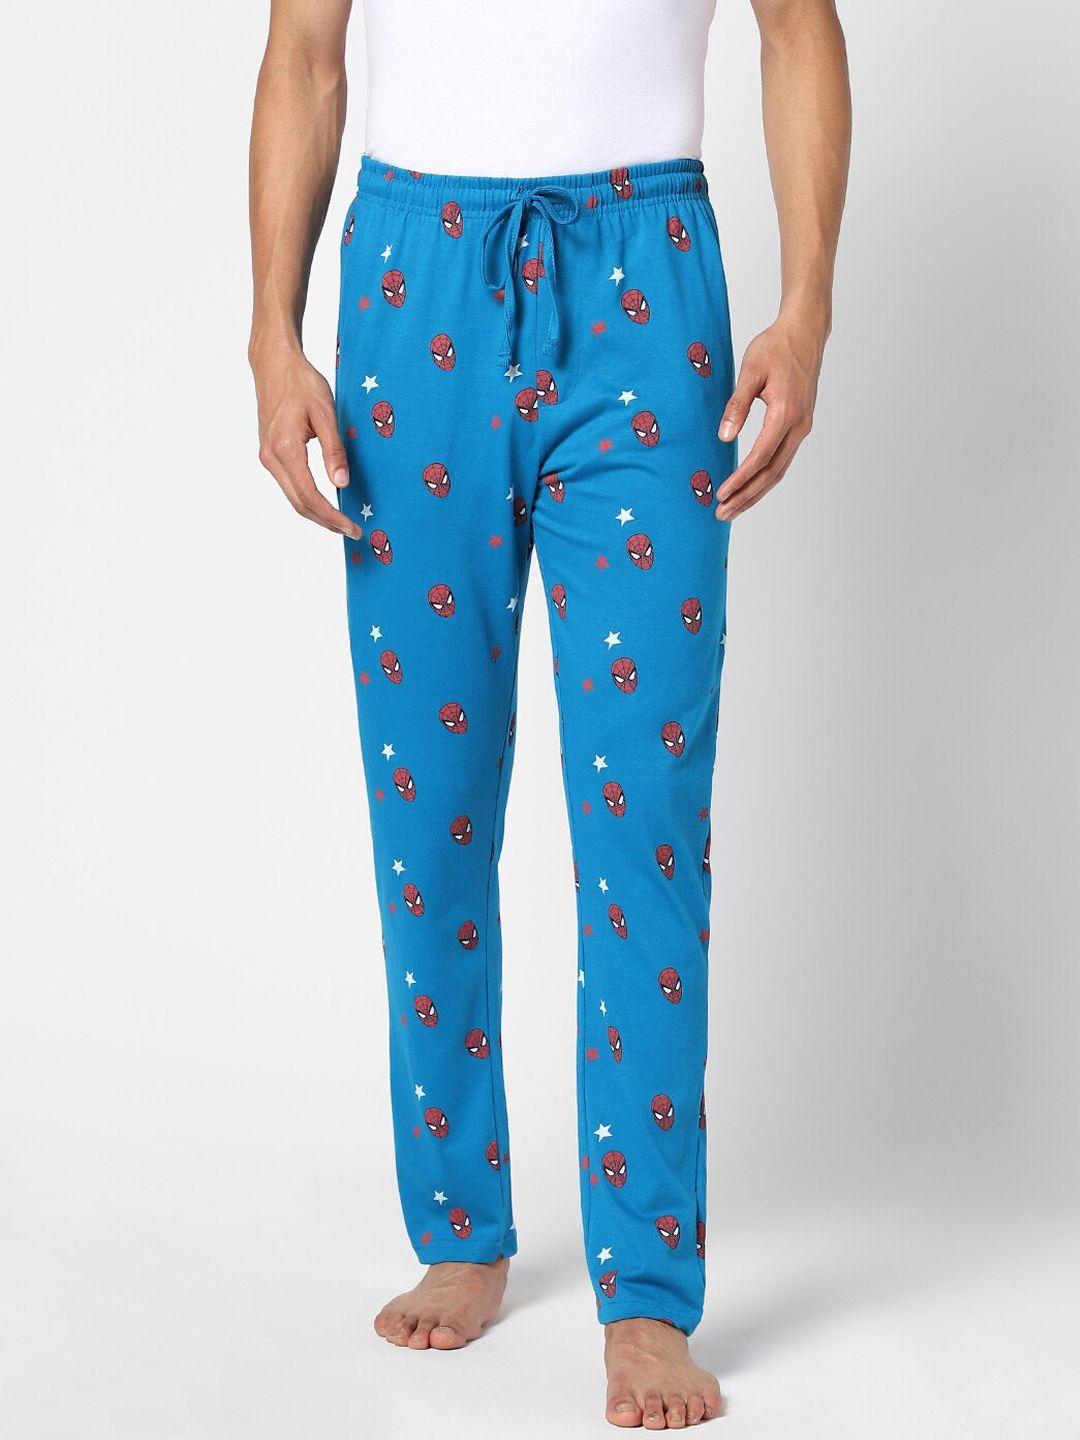 ajile by pantaloons men blue spiderman printed cotton lounge pants